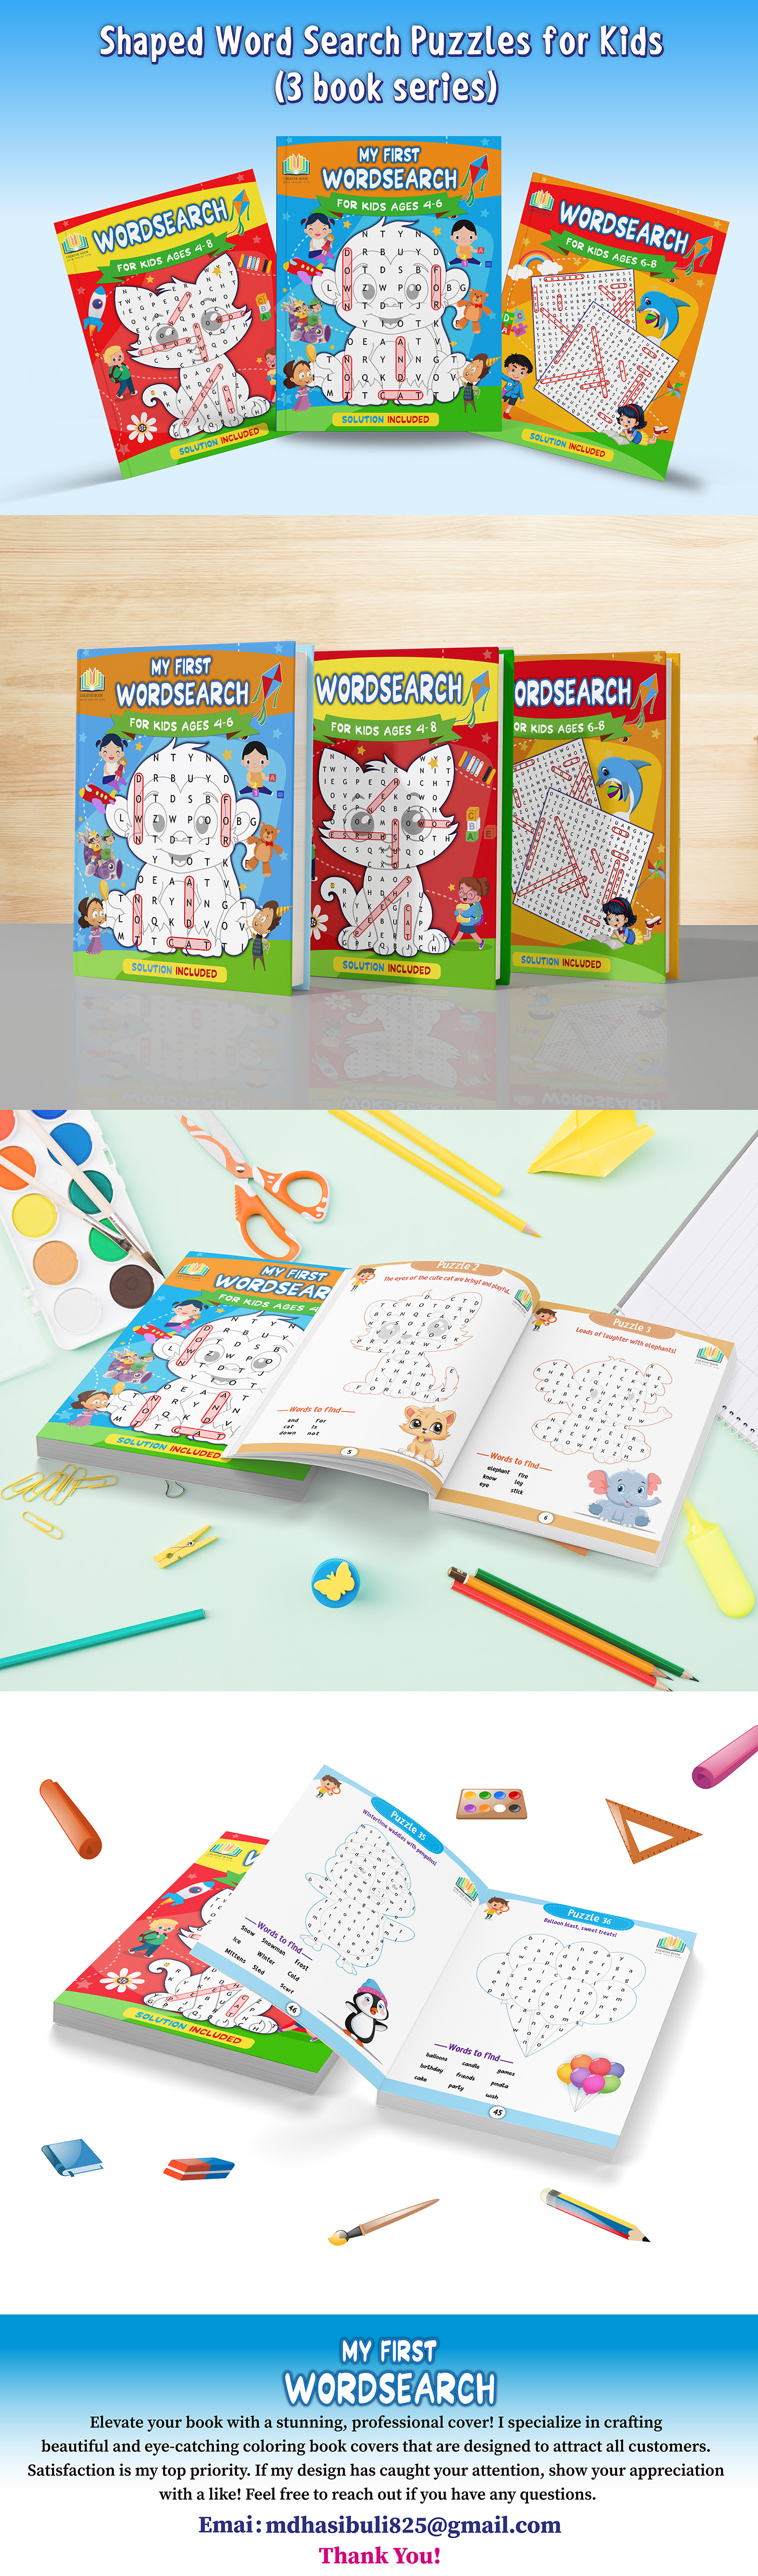 Kids activity book activity book children's book amazon kdp kdp coloring book Book Cover Design Layout workbook coloring book KDP Interior